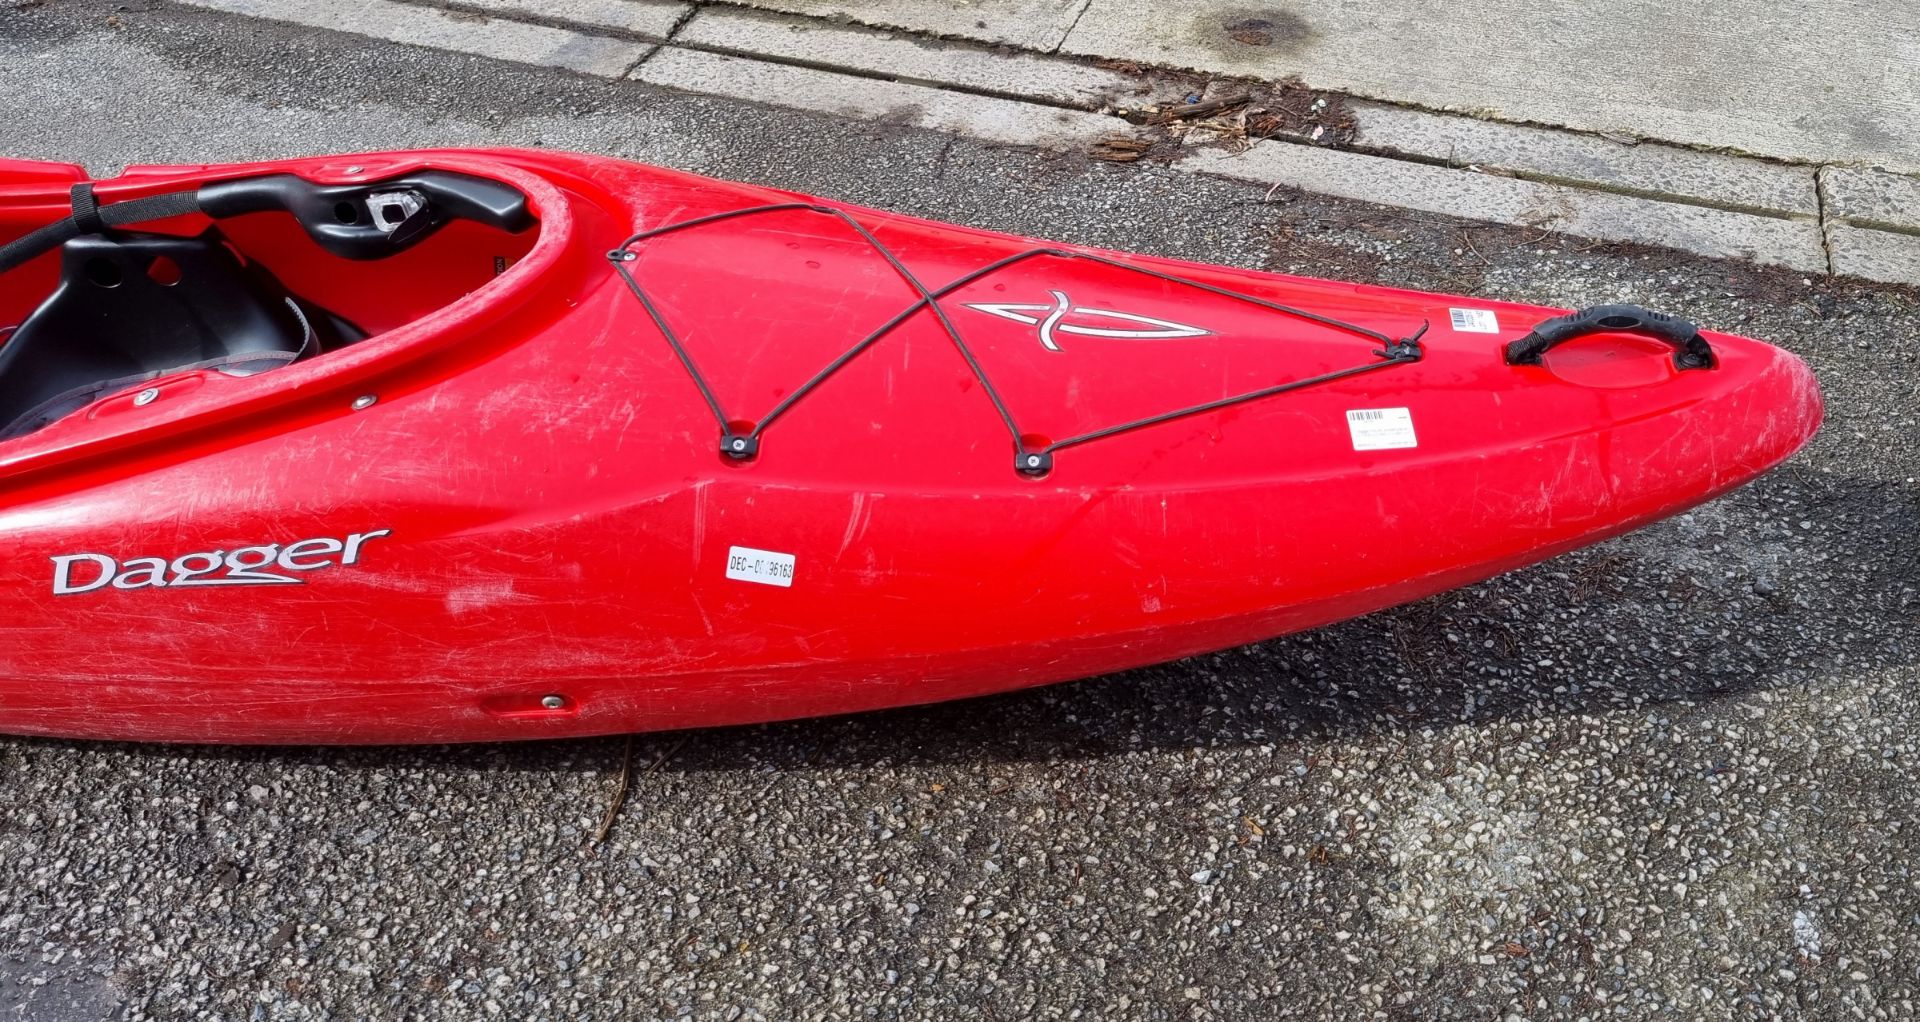 Dagger Katana polyethylene kayak - red - W 3200 x D 660 x H 420mm - Image 5 of 8